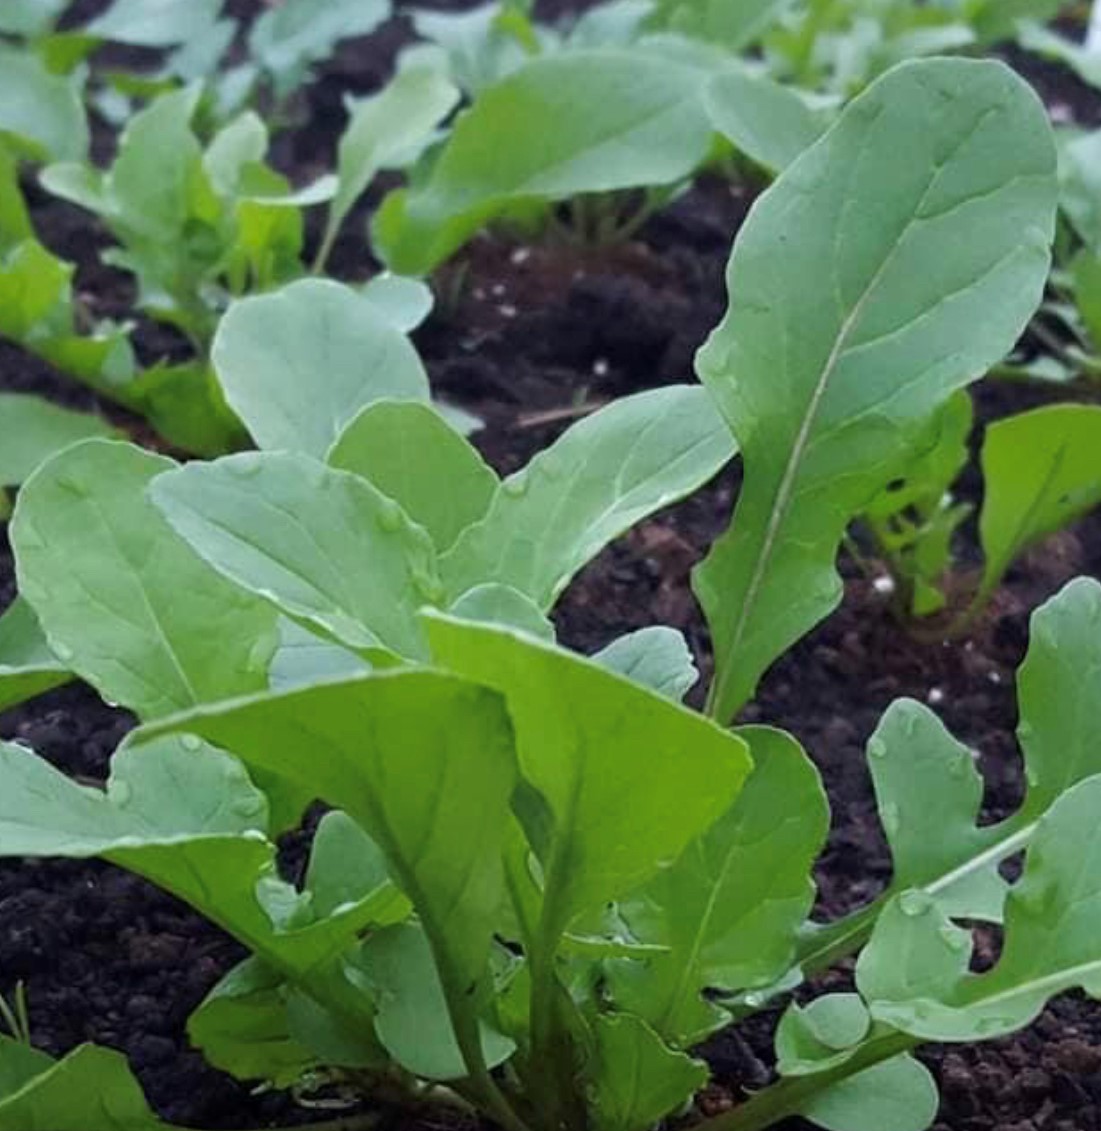 Arugula - Rocket Salat (Roquette) Heirloom Seeds